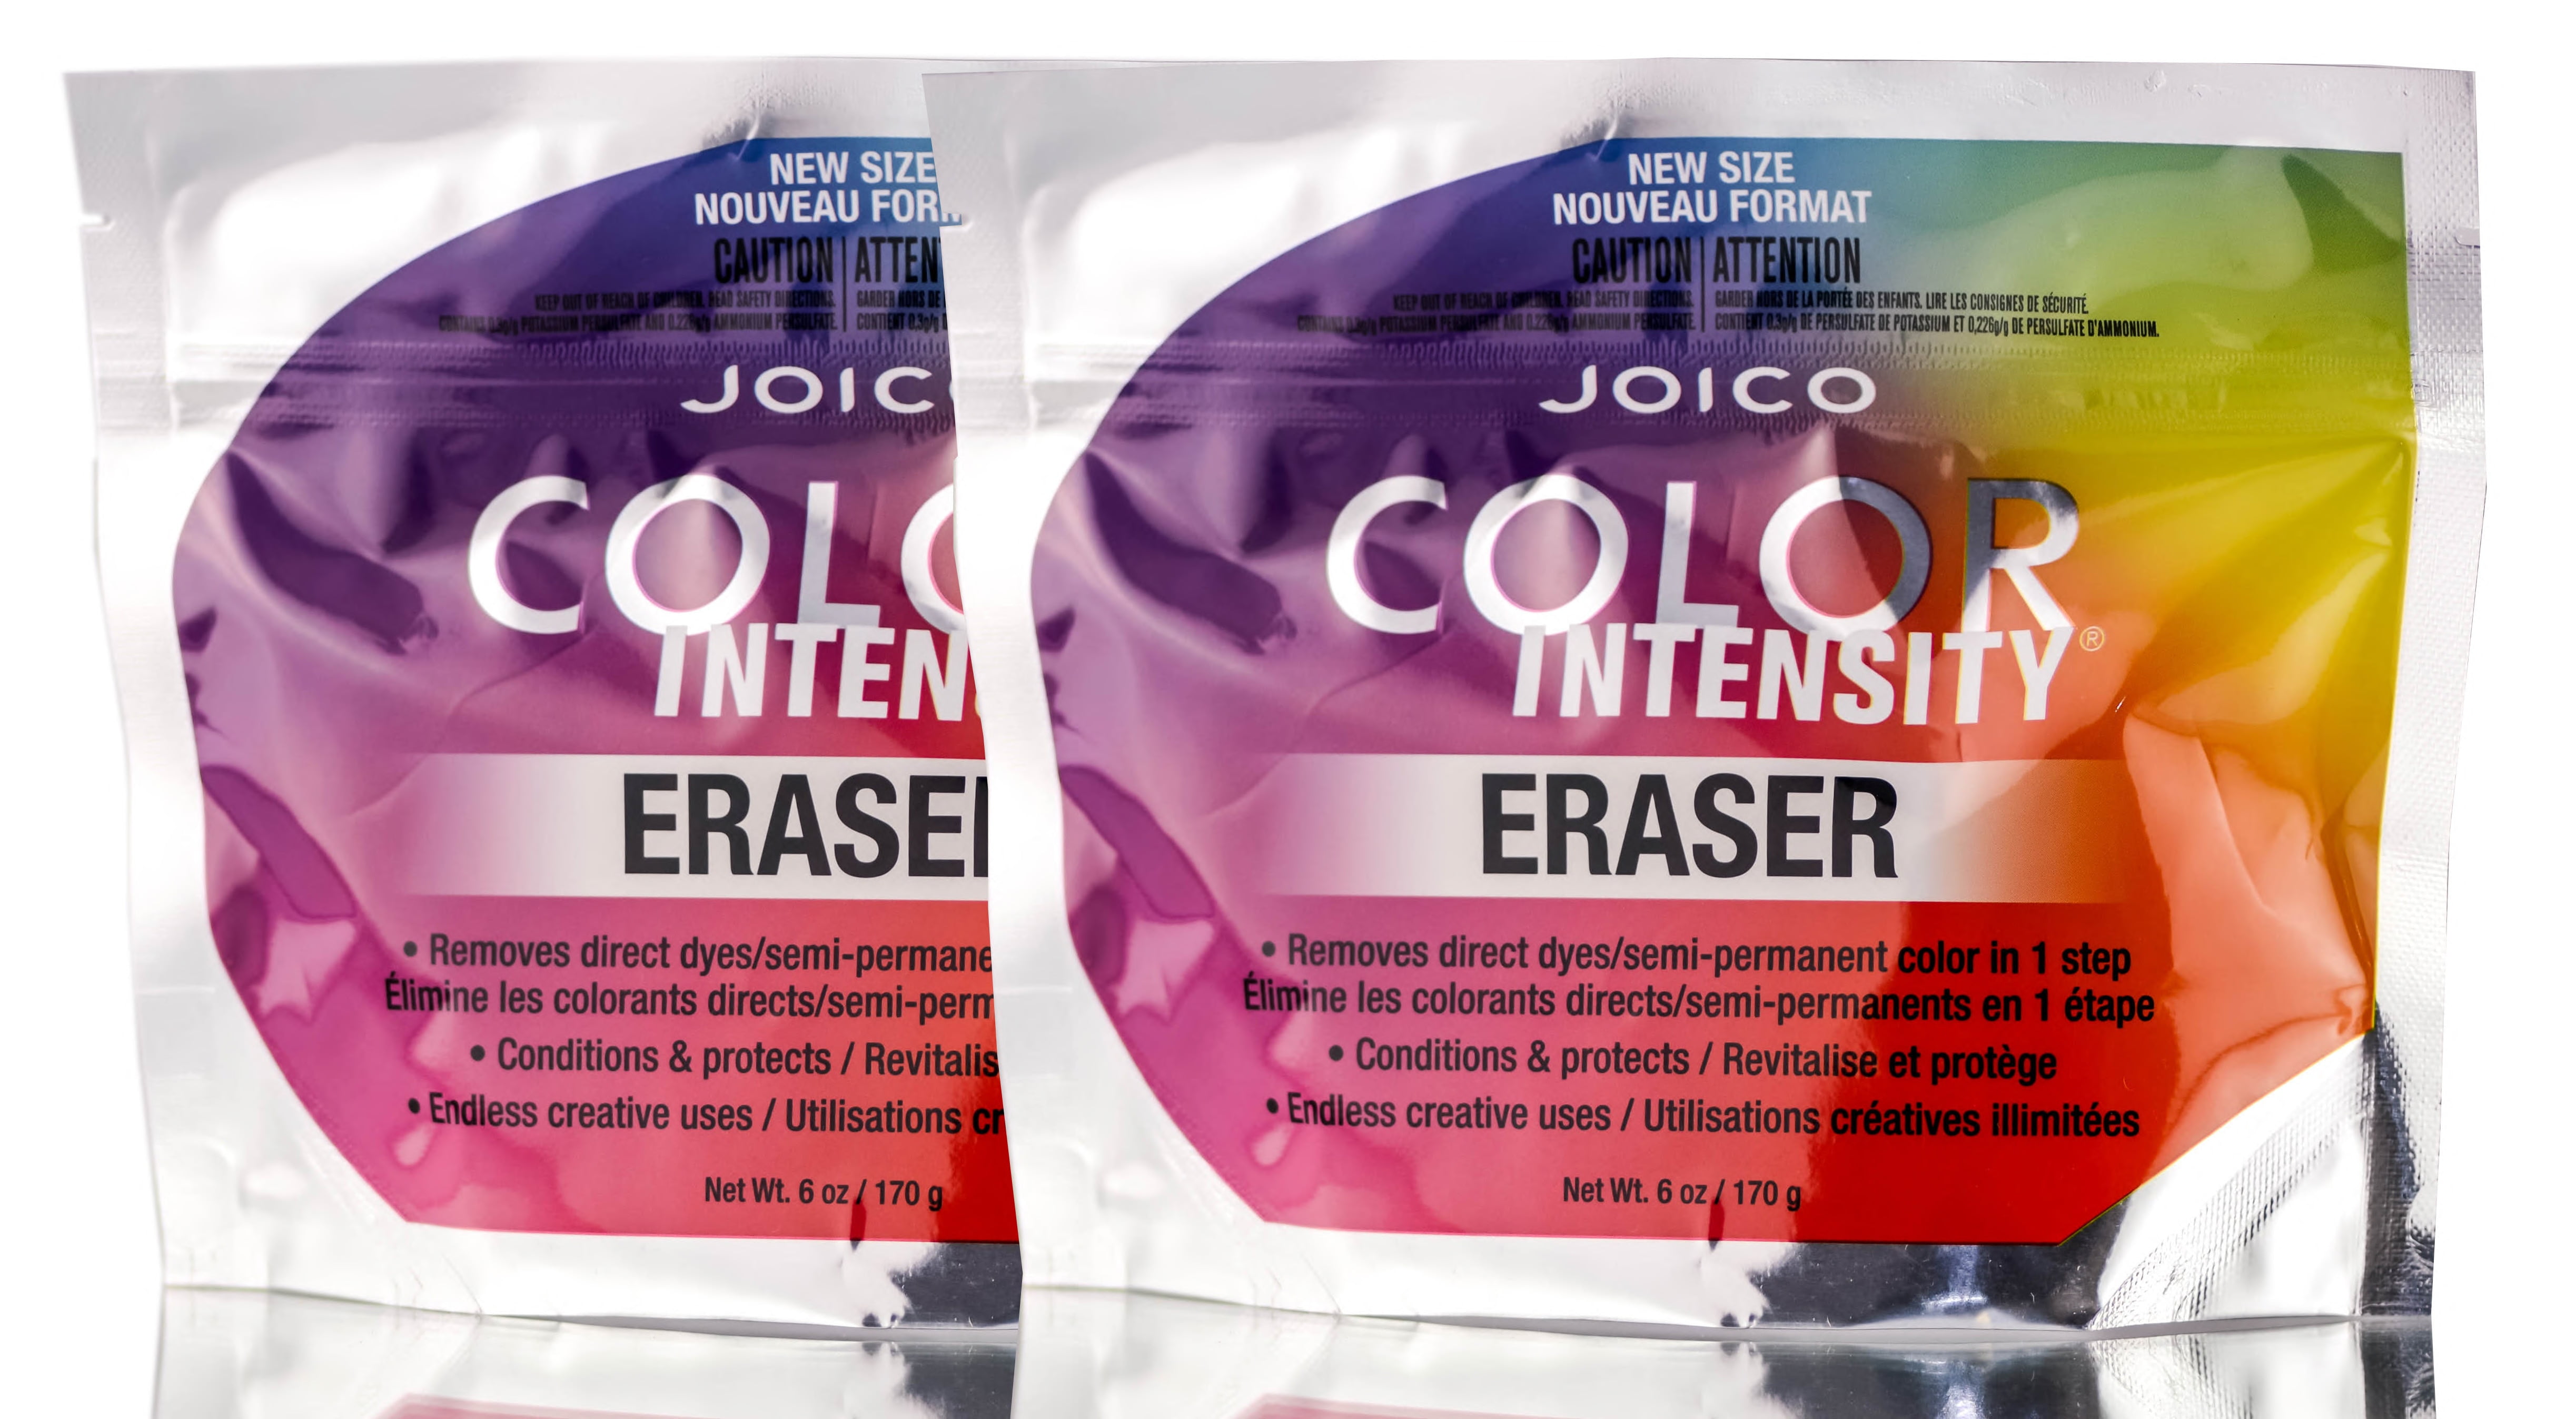 2. Joico Color Intensity Eraser on Blue Hair - wide 4